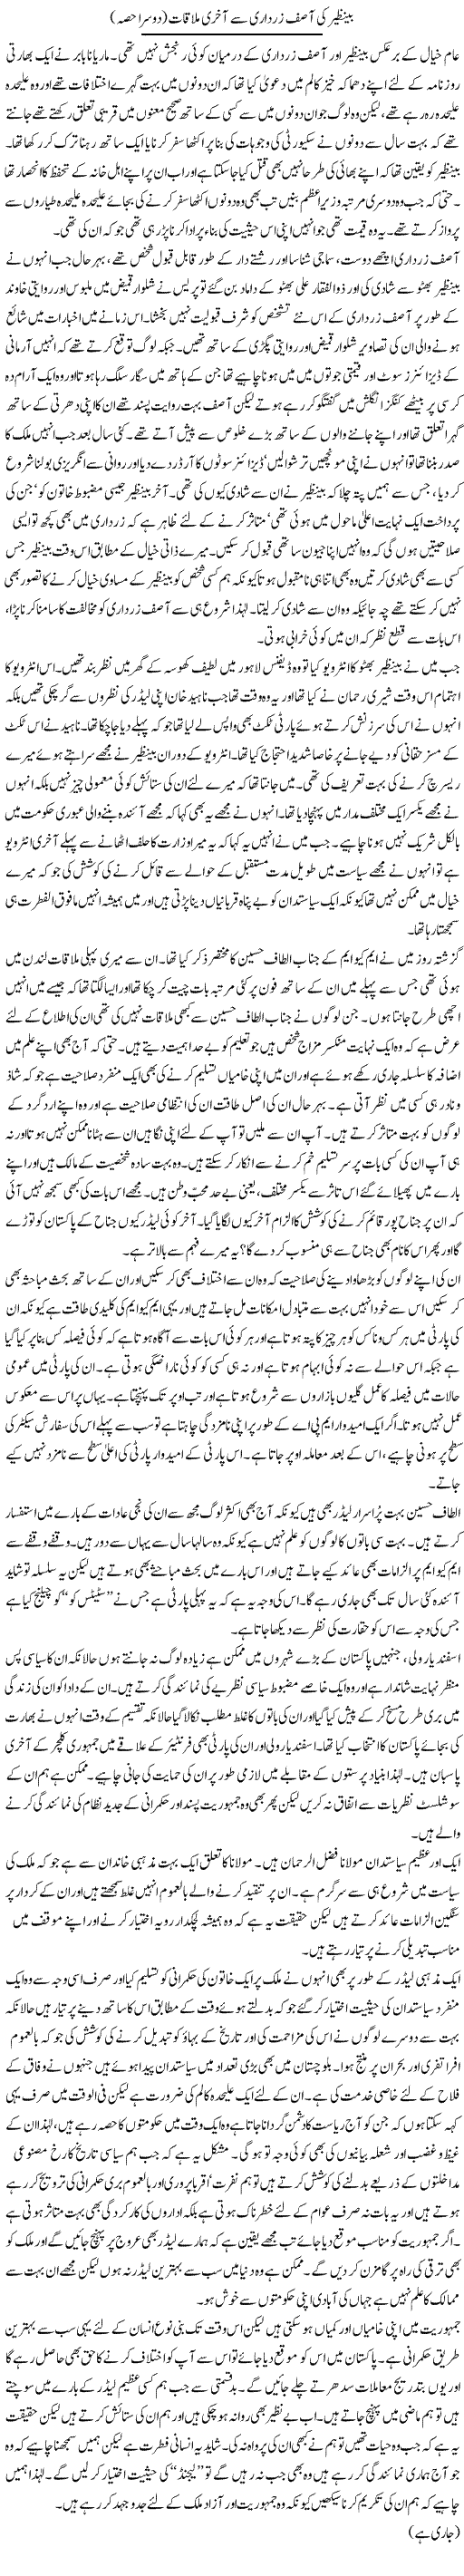 Benazir Zardari Express Column Mubashir Luqman 25 July 2010